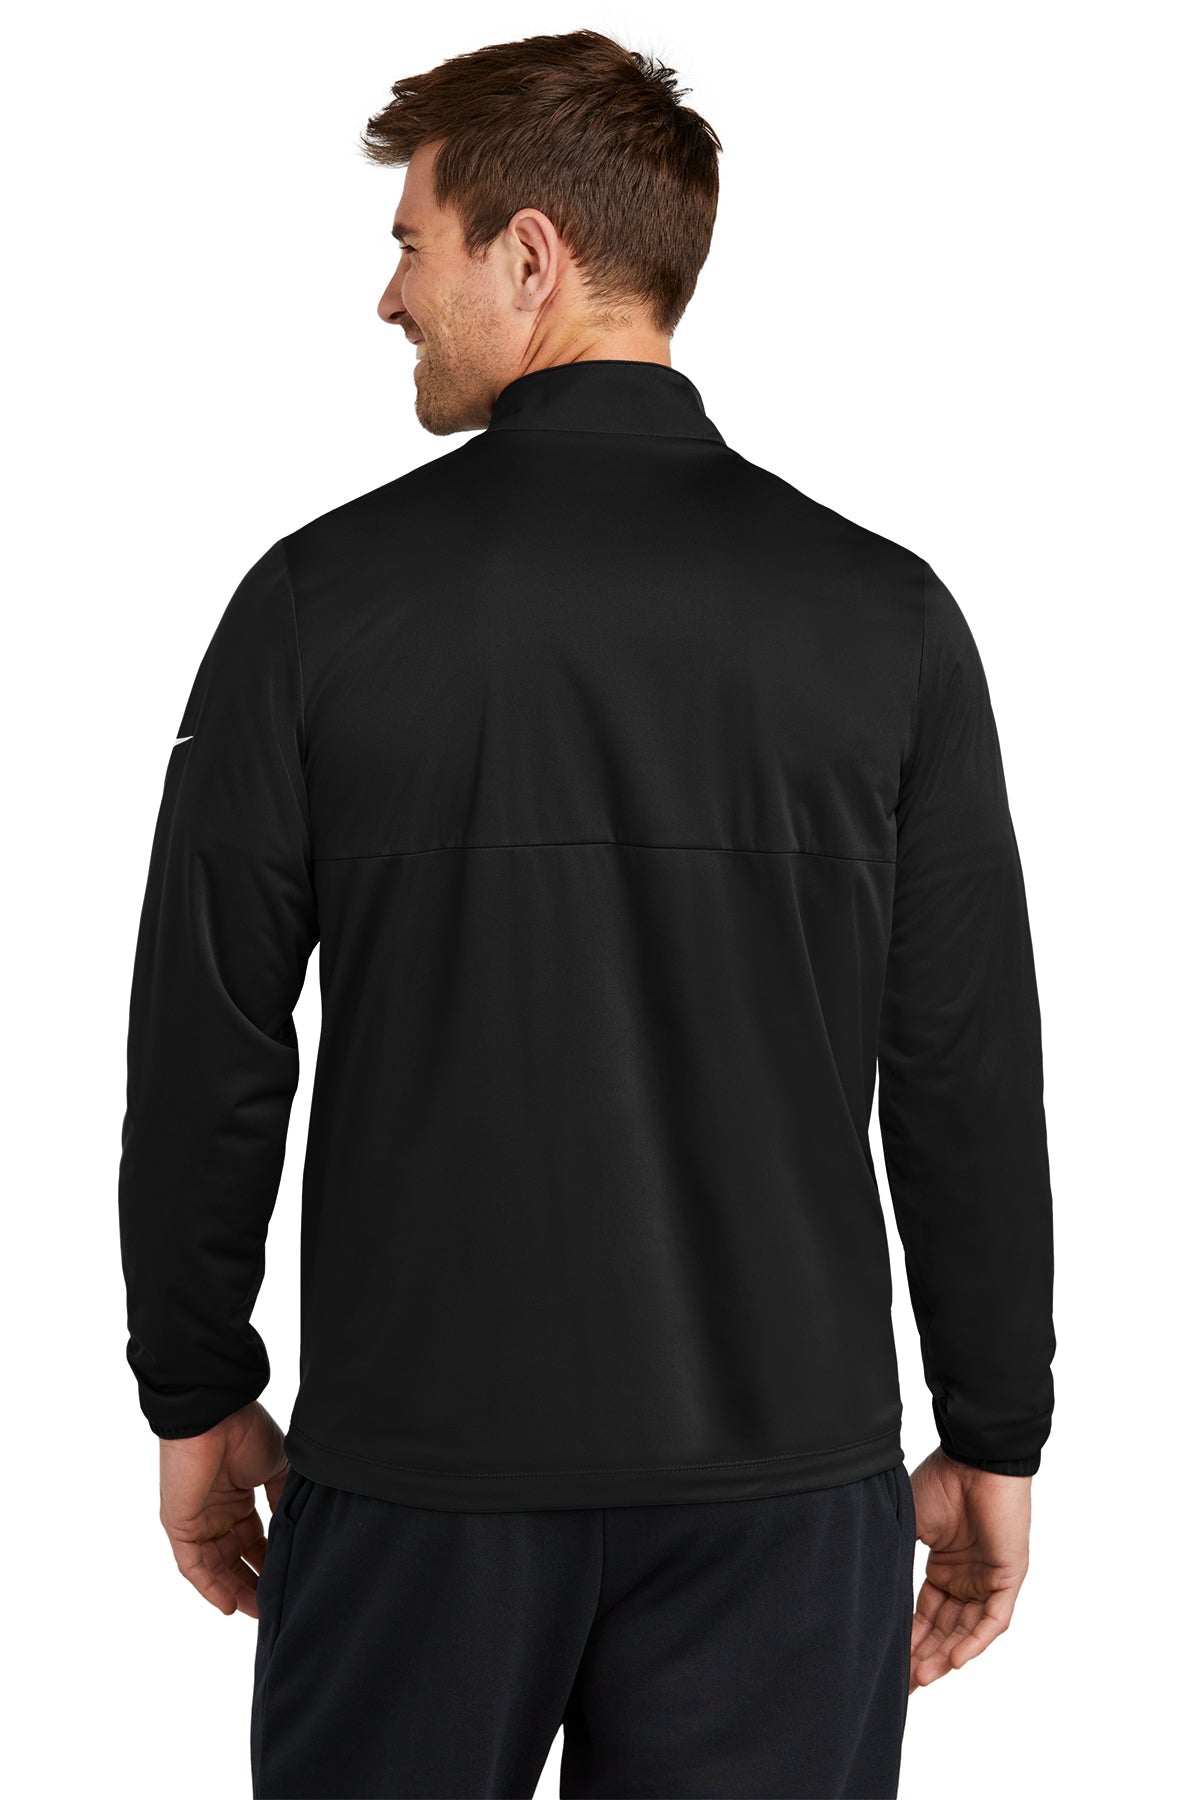 Nike Storm-FIT Full-Zip Custom Jackets, Black